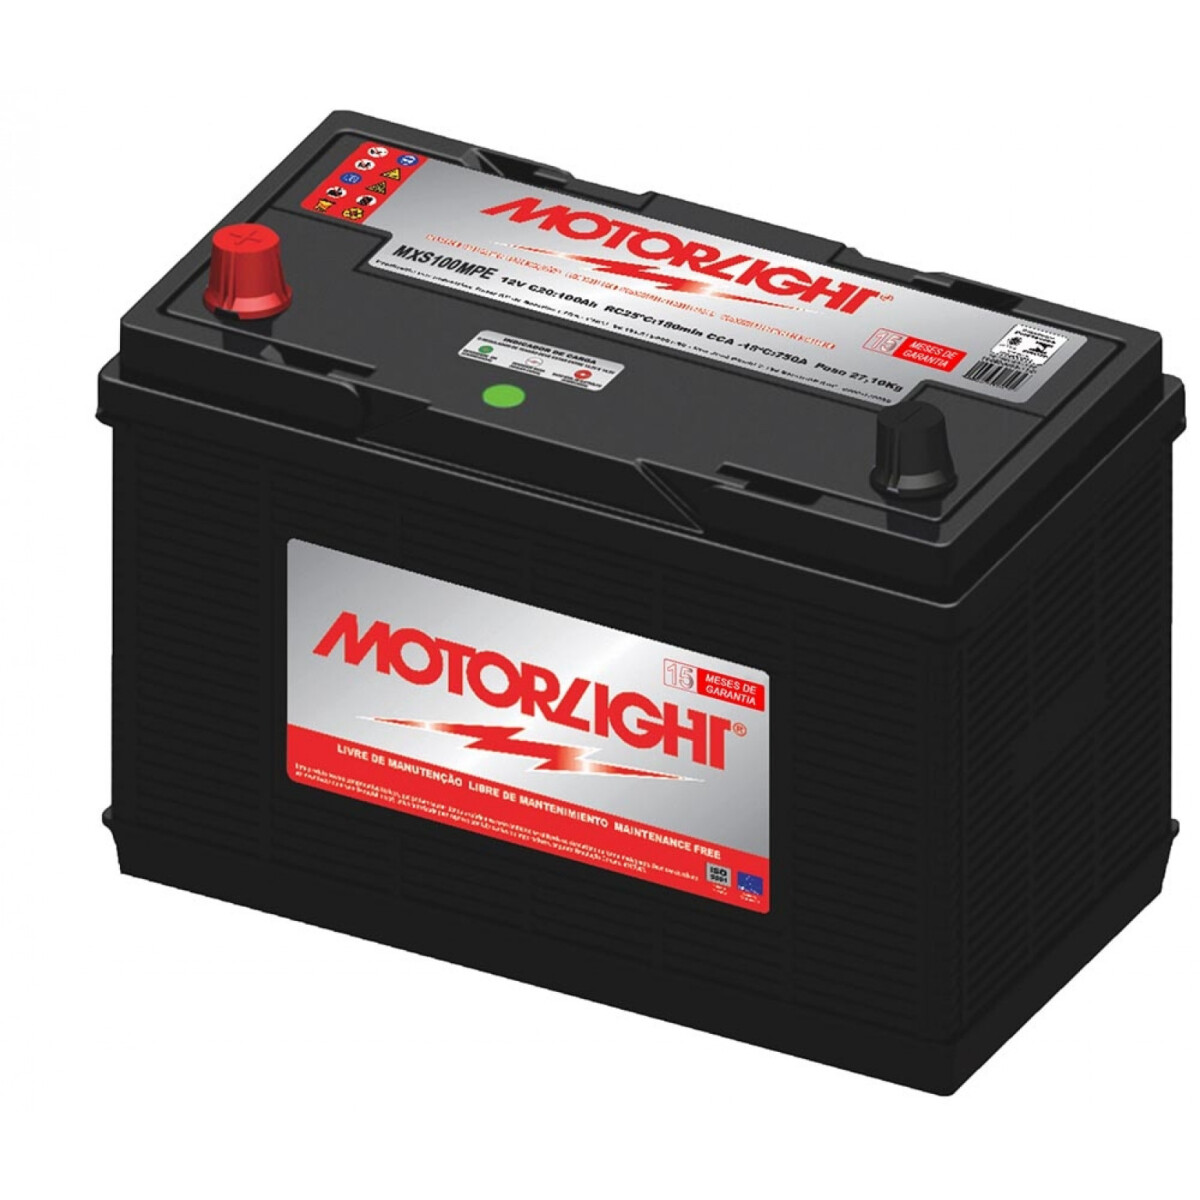 Bateria Motorlight - 130amp Polo Positivo Izquierdo 